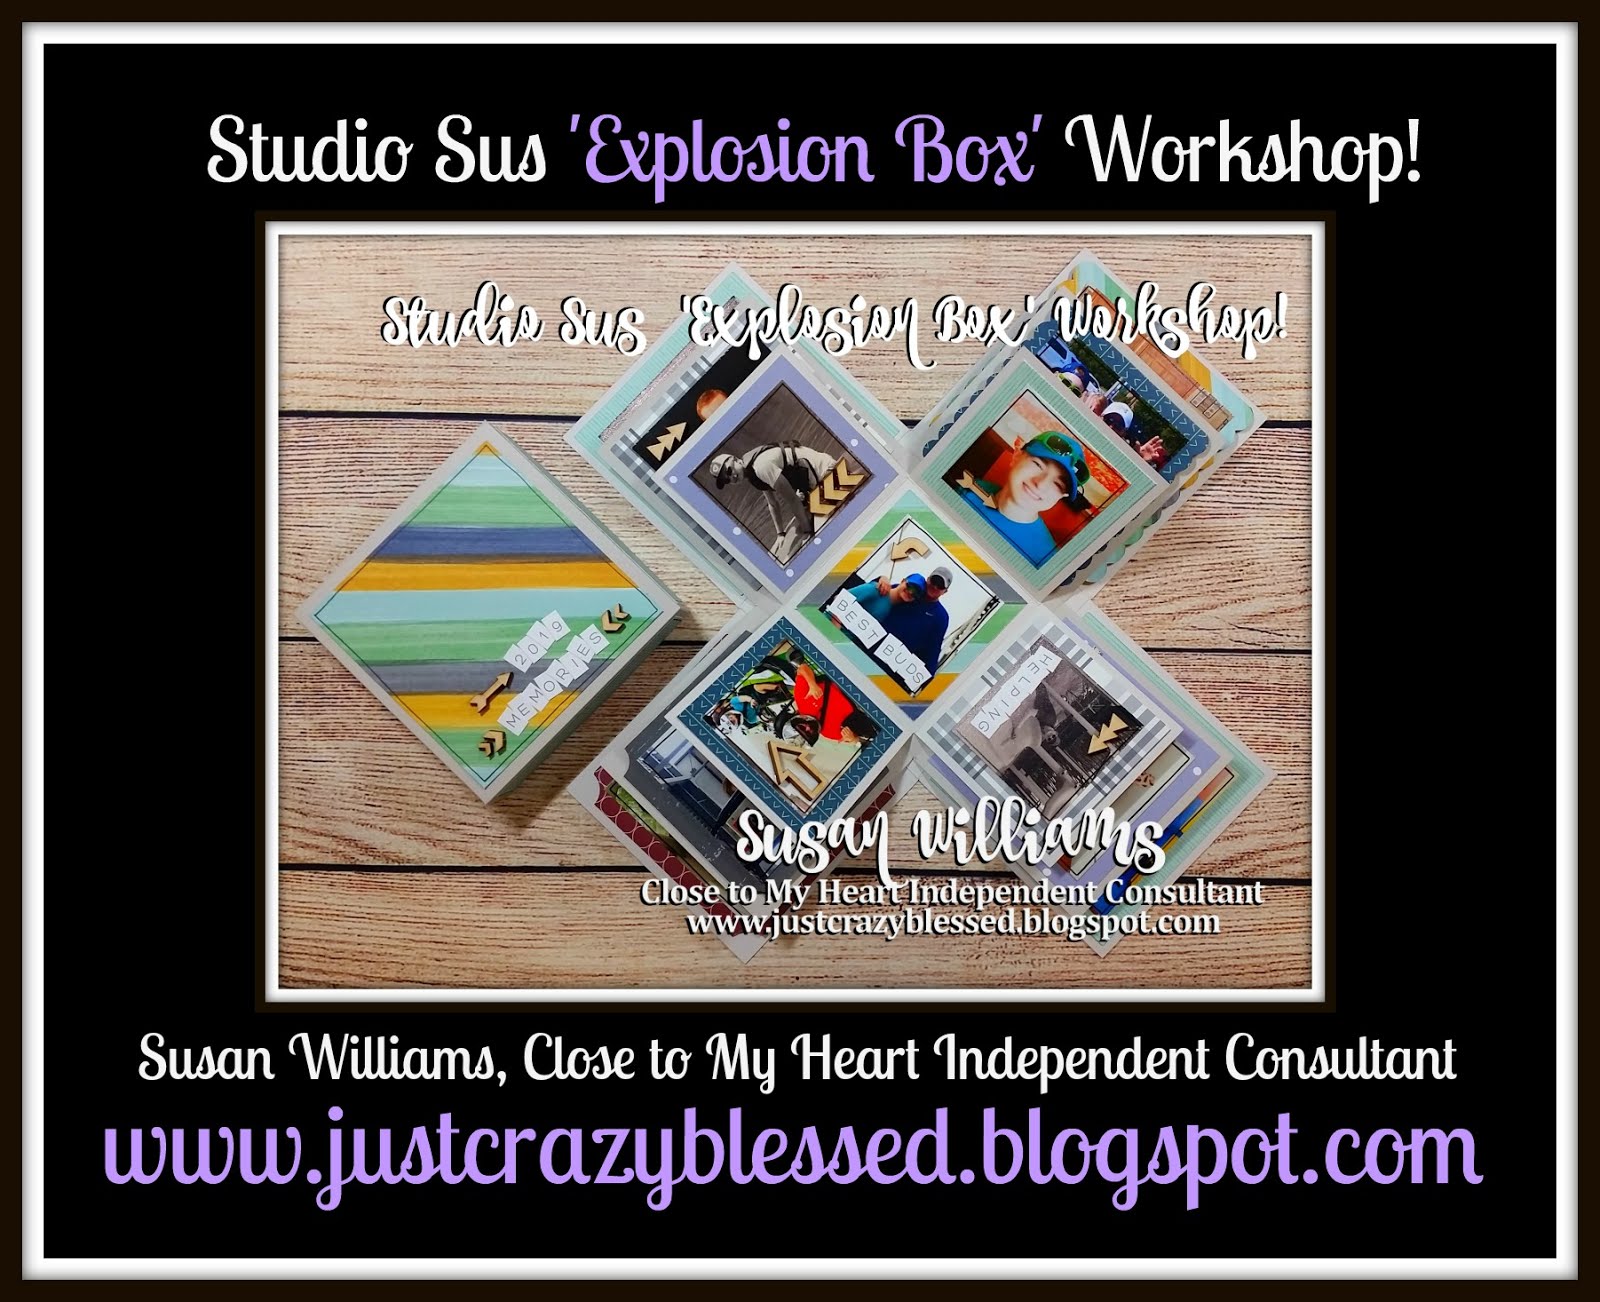 Explosion Box (29) Photo Workshop!